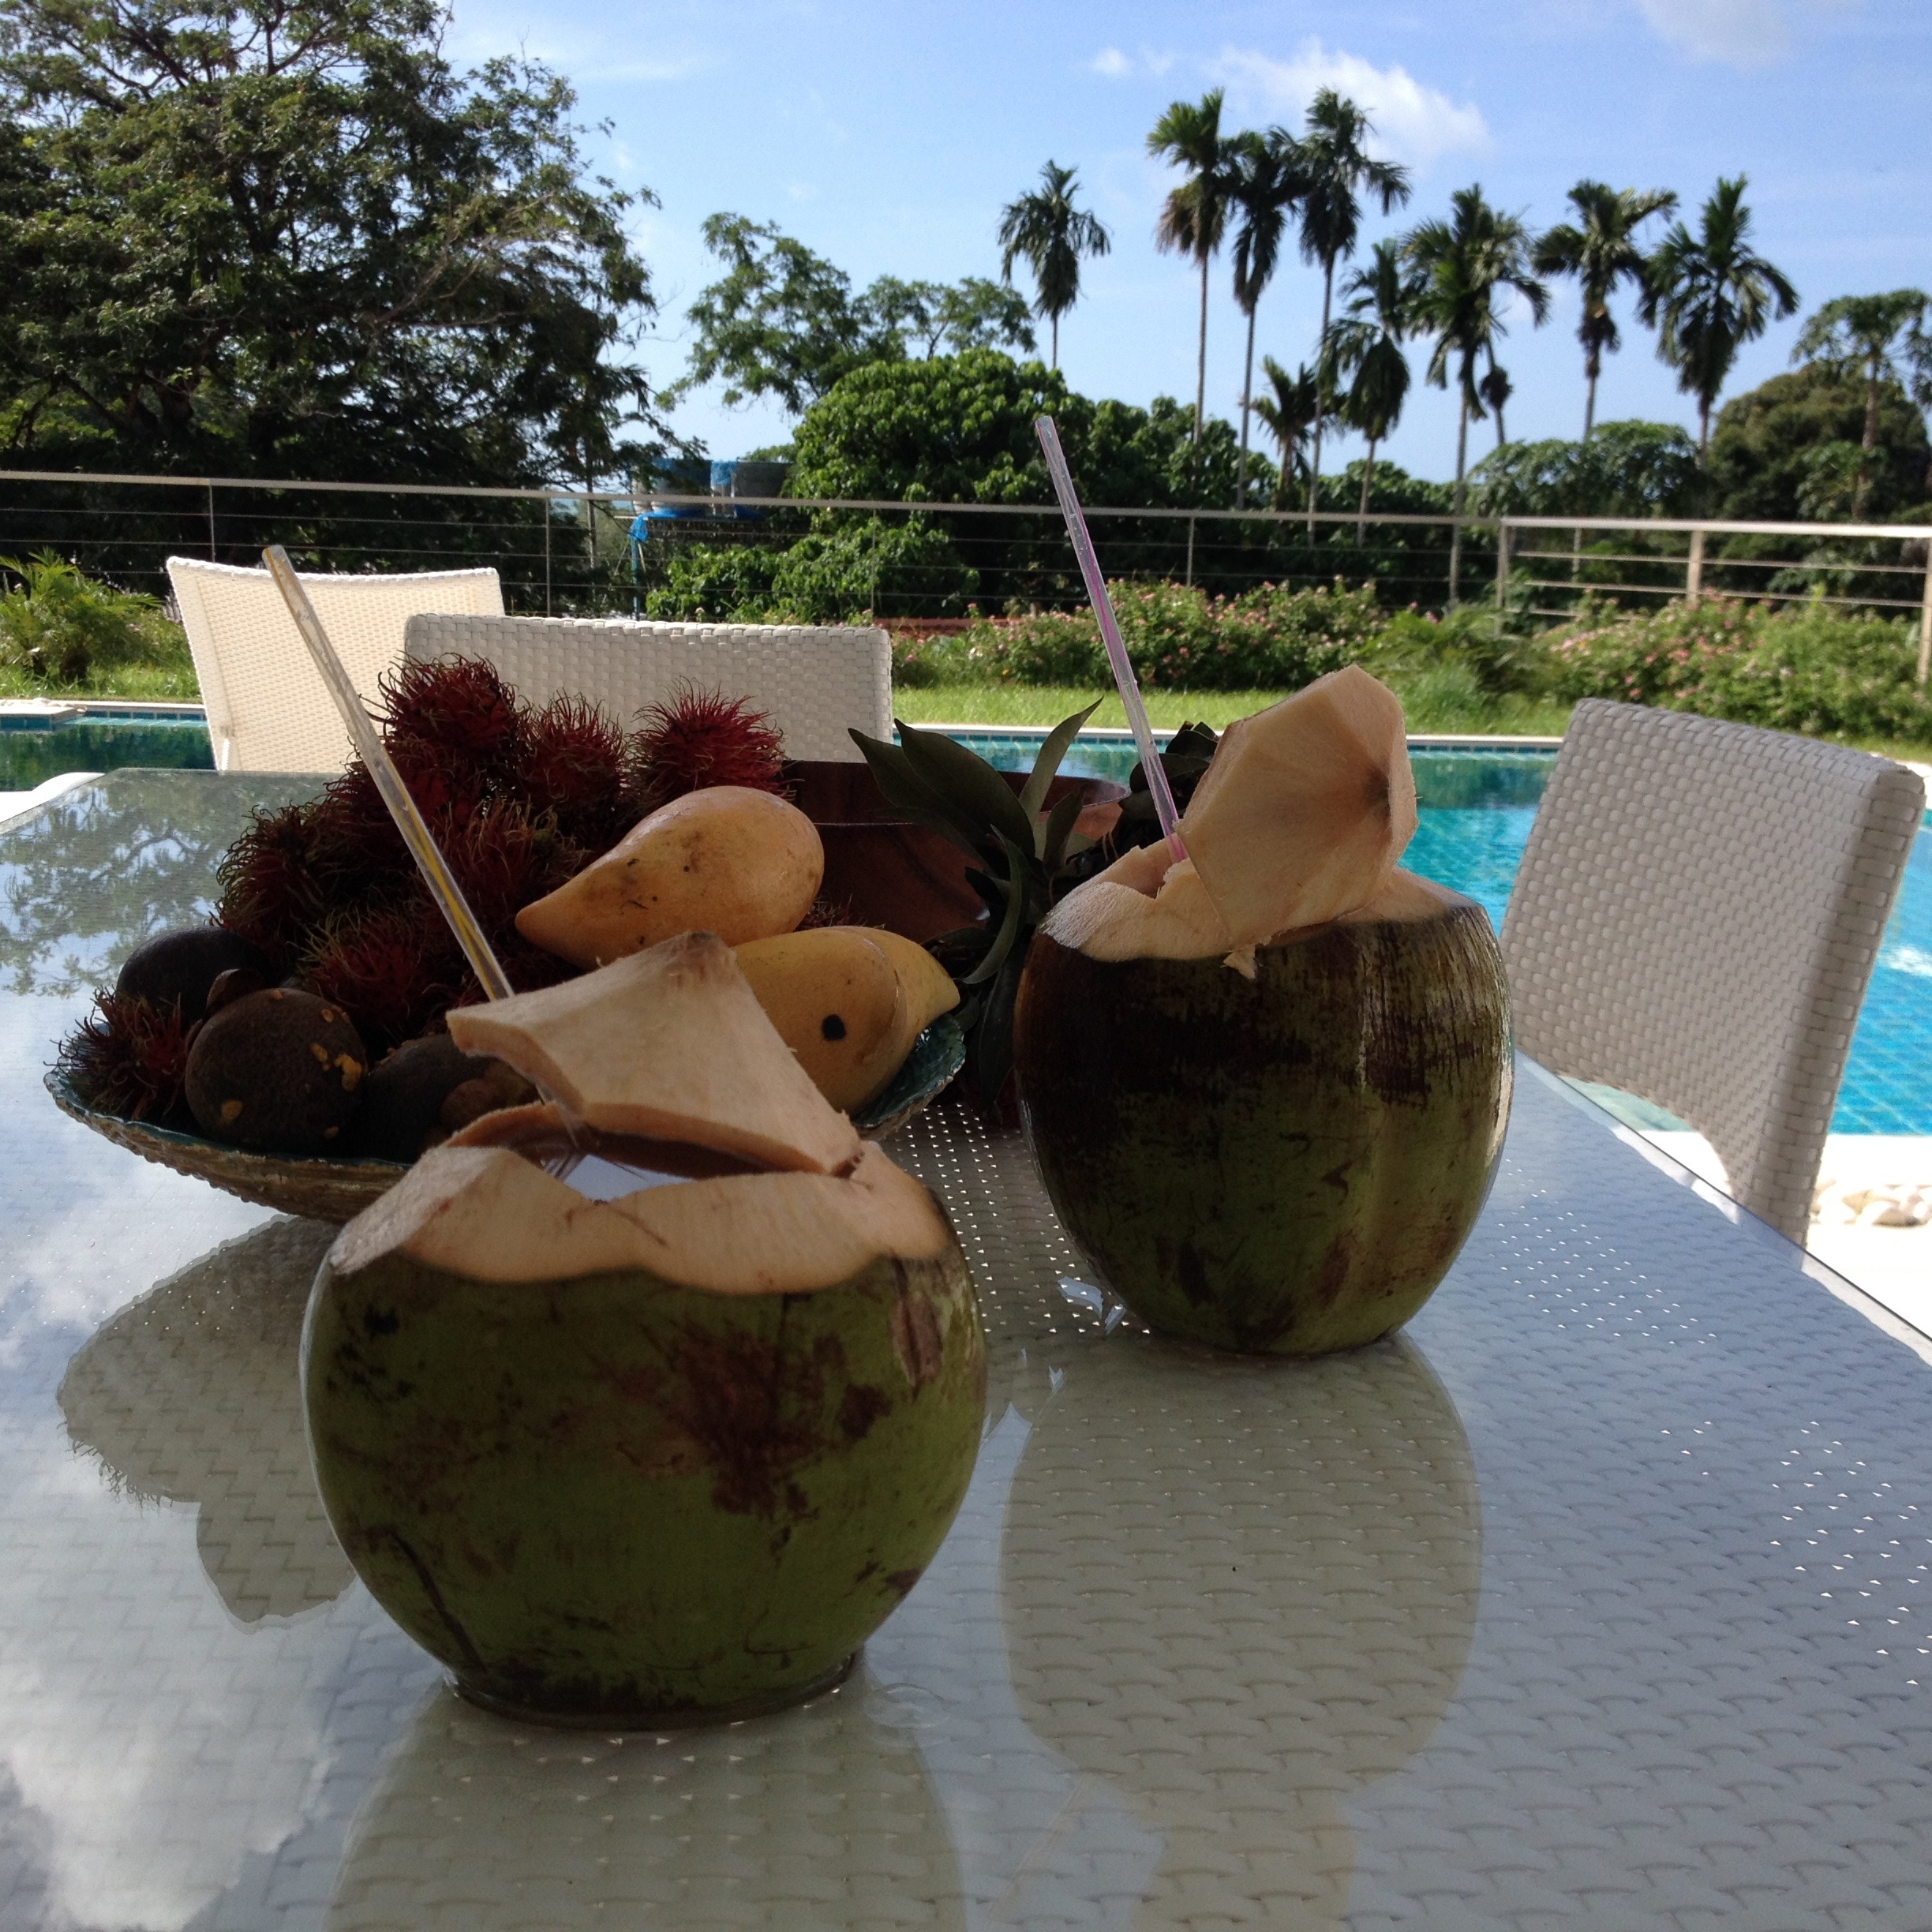 coconut fruit and rambutan